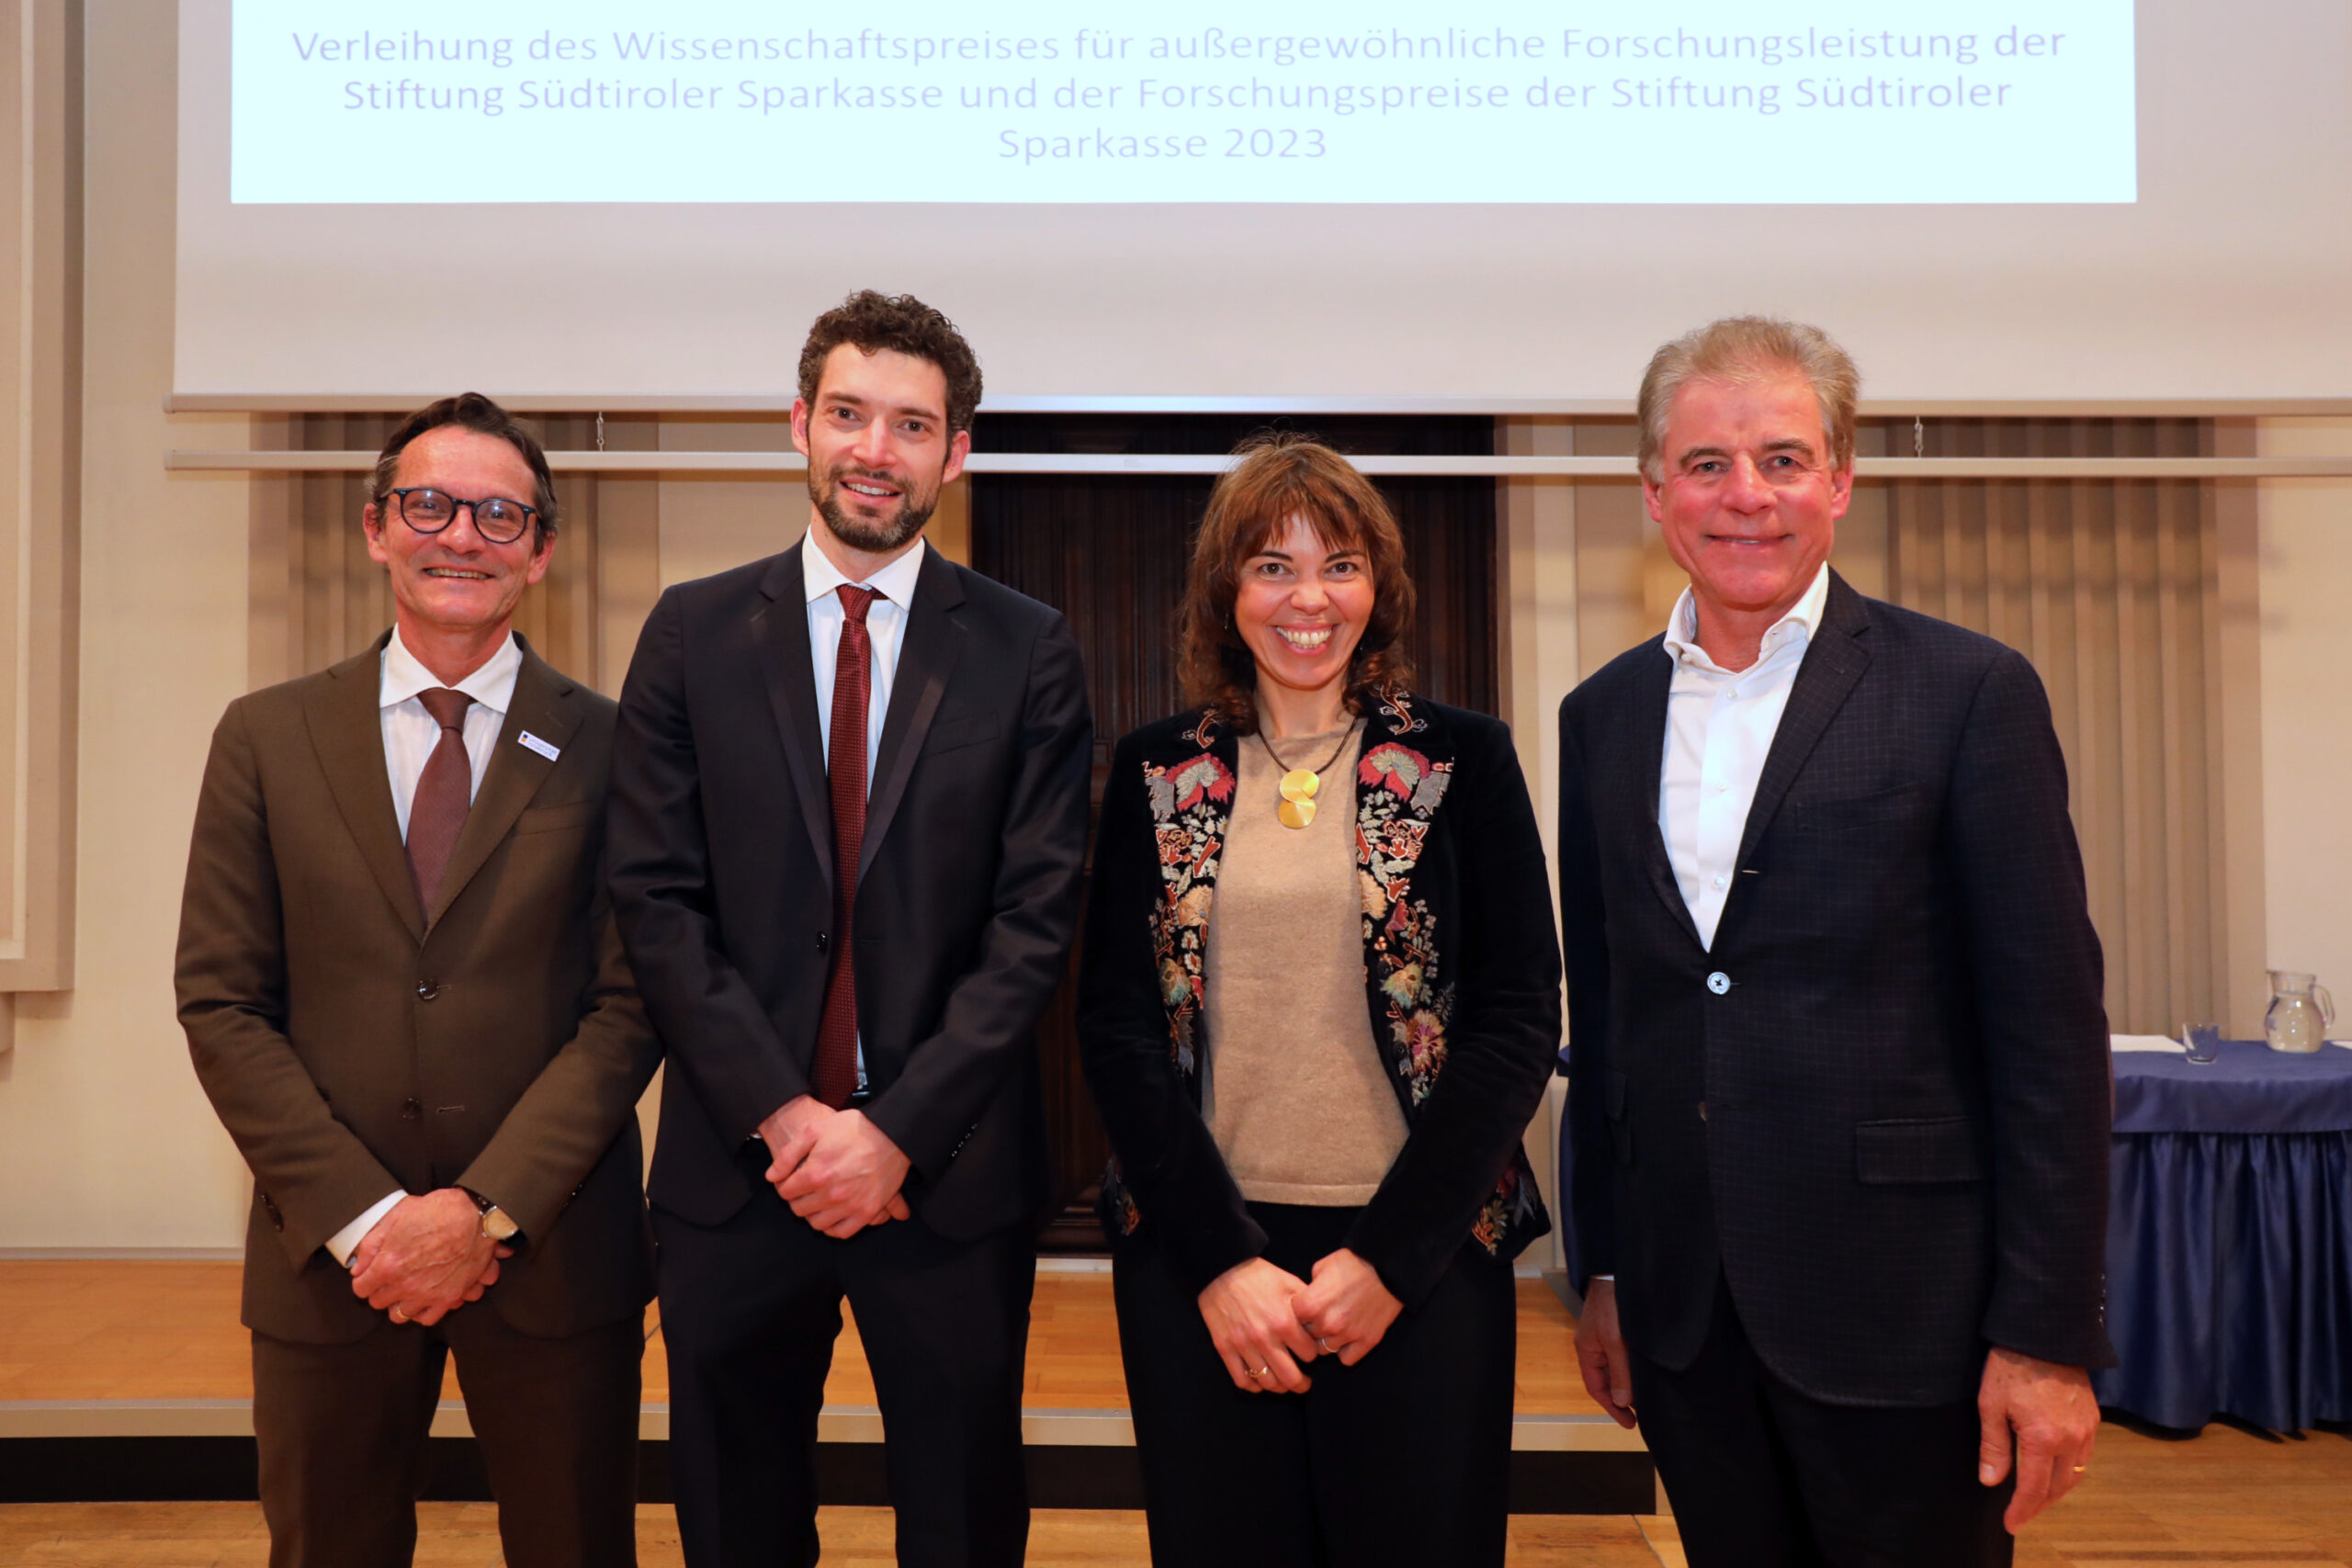 Vice-Rector Bernhard Fügenschuh and the President of the Foundation Konrad Bergmeister alongside Prize Science winners Hannes Pichler and Francesca Ferlaino.